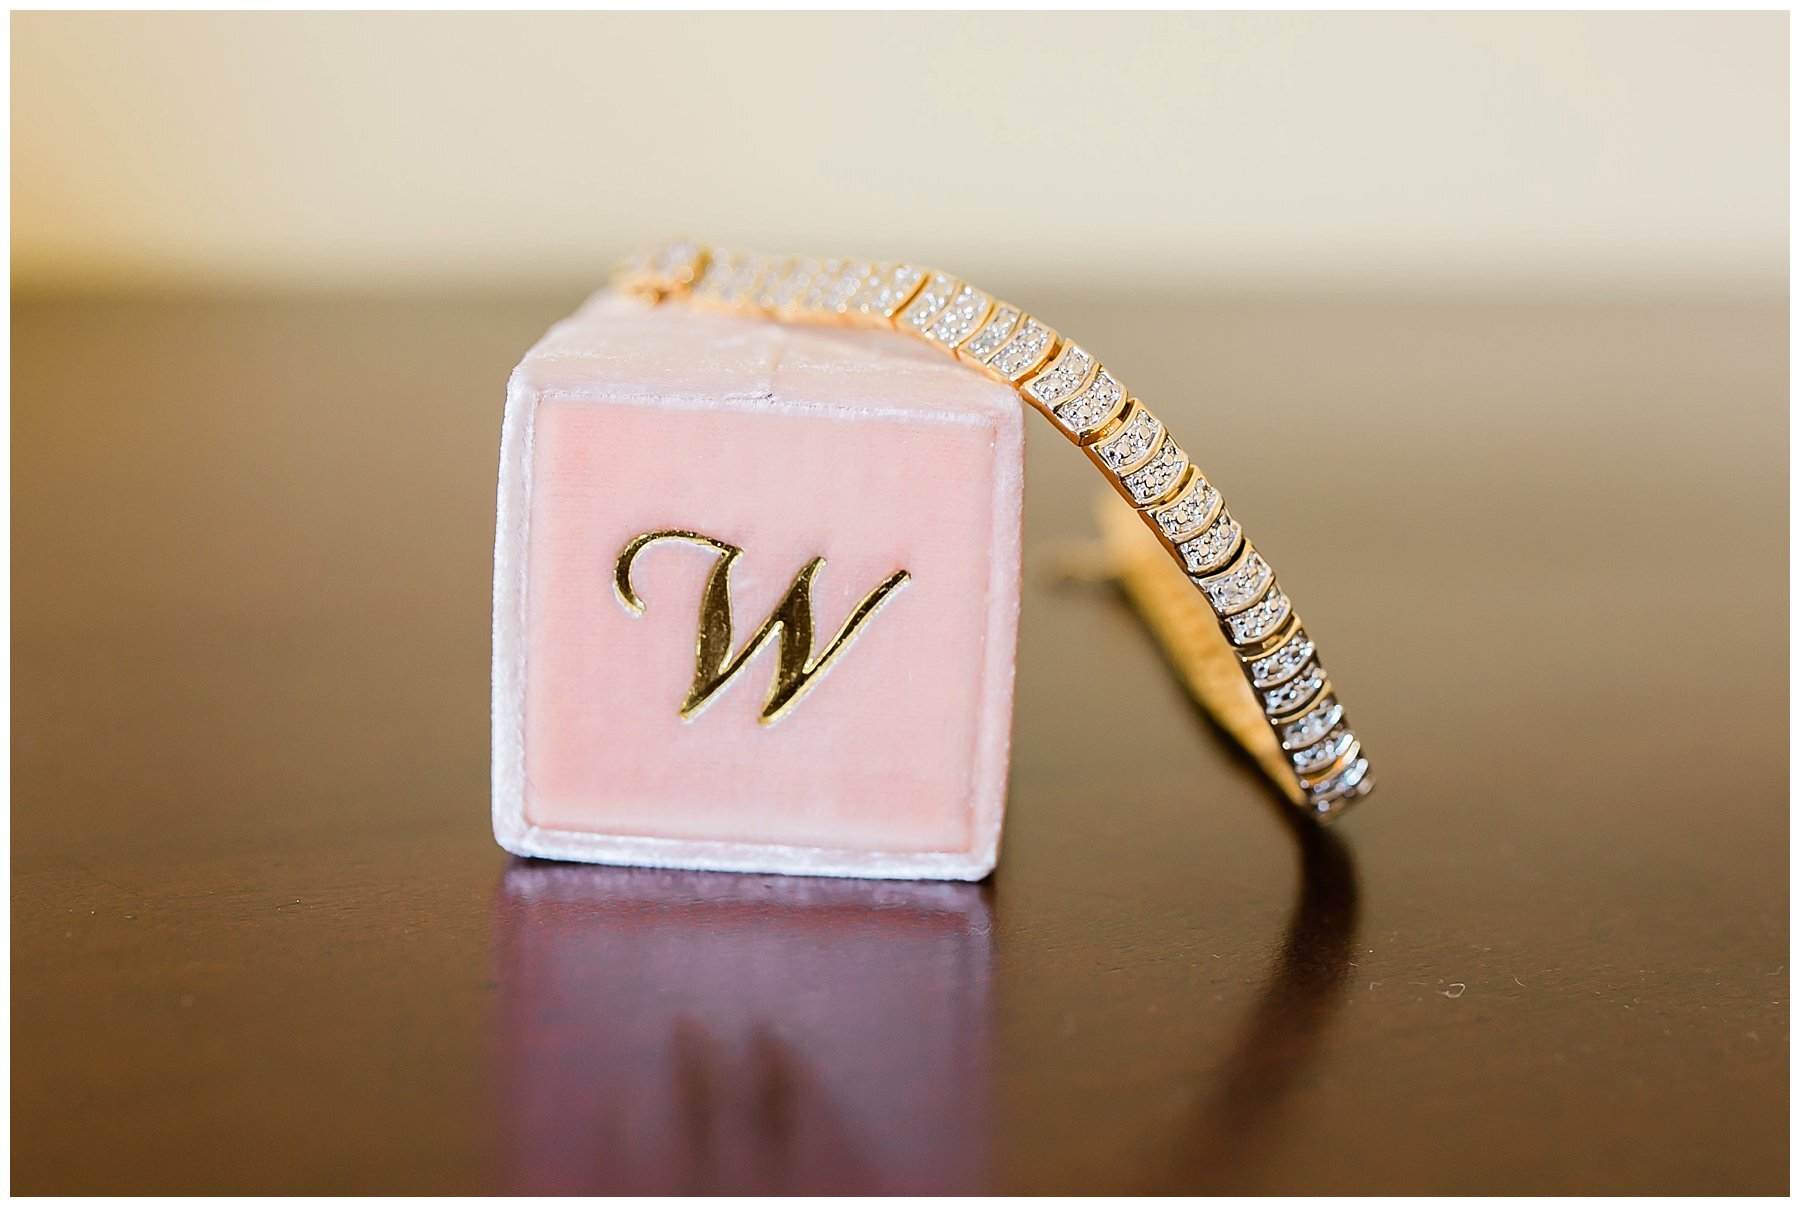  close up of wedding ring box and bracelet 